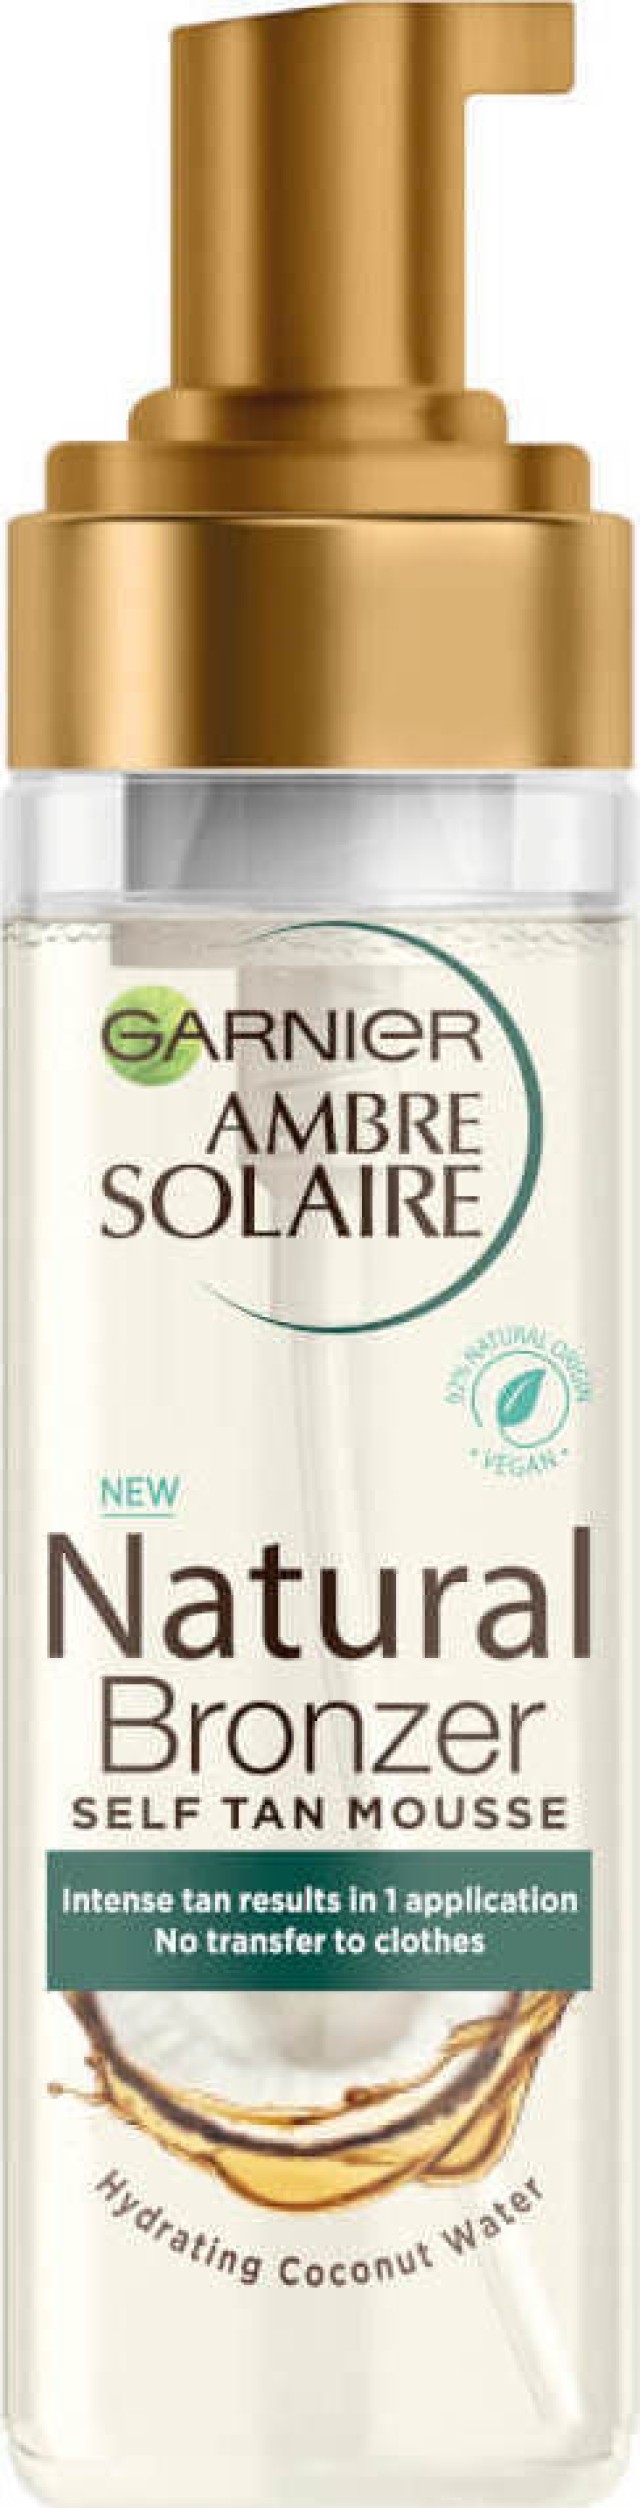 Garnier Ambre Solaire Vegan Natural Bronzer Intense Clear Self Tan Mousse Αυτομαυριστικός Αφρός Σώματος 200ml